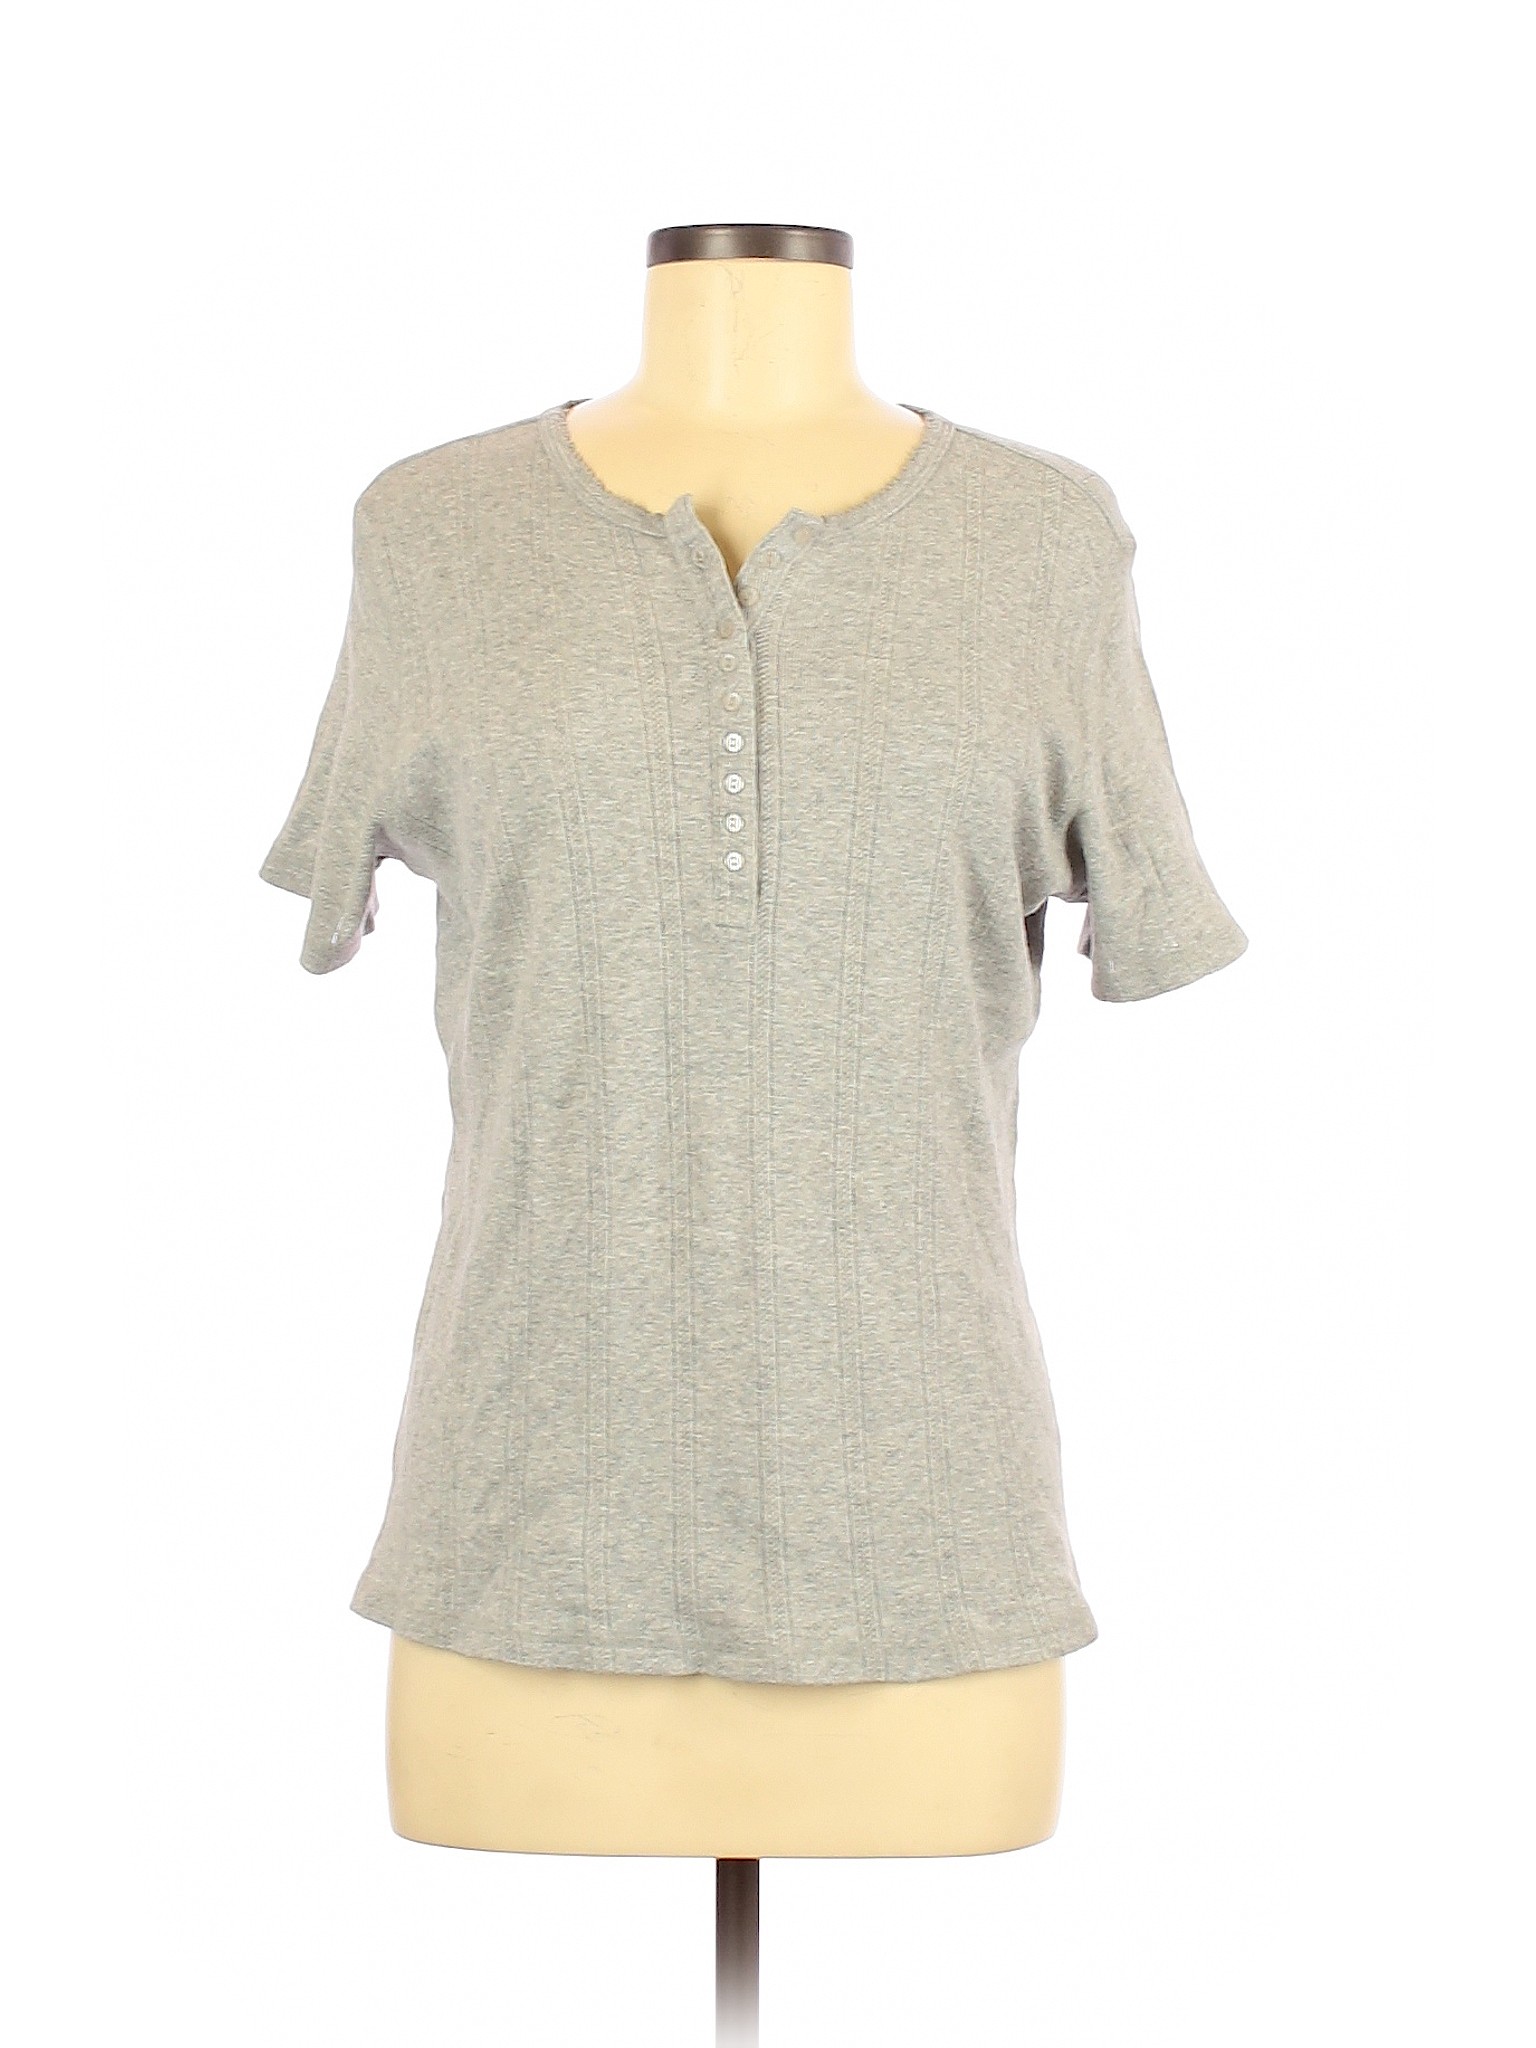 Karen Scott Women Gray Short Sleeve Top M | eBay